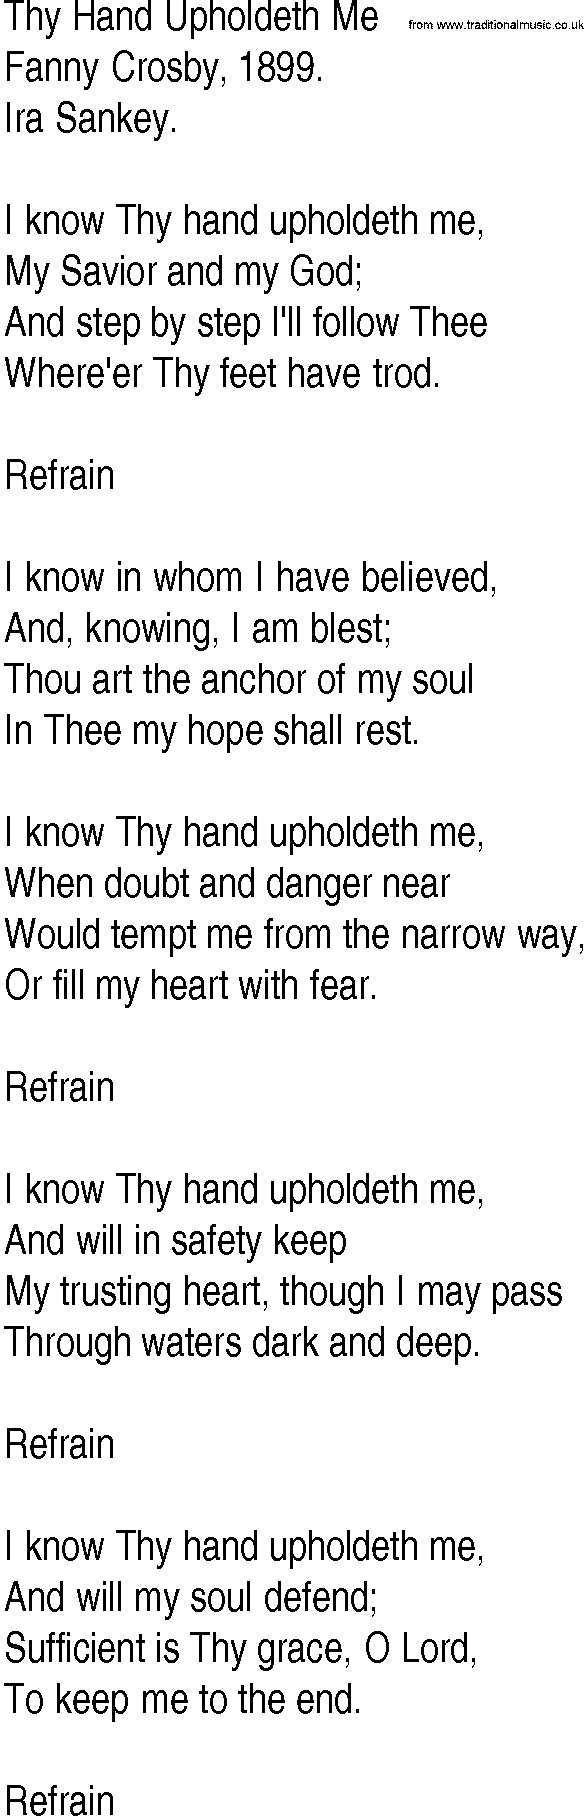 Hymn and Gospel Song: Thy Hand Upholdeth Me by Fanny Crosby lyrics